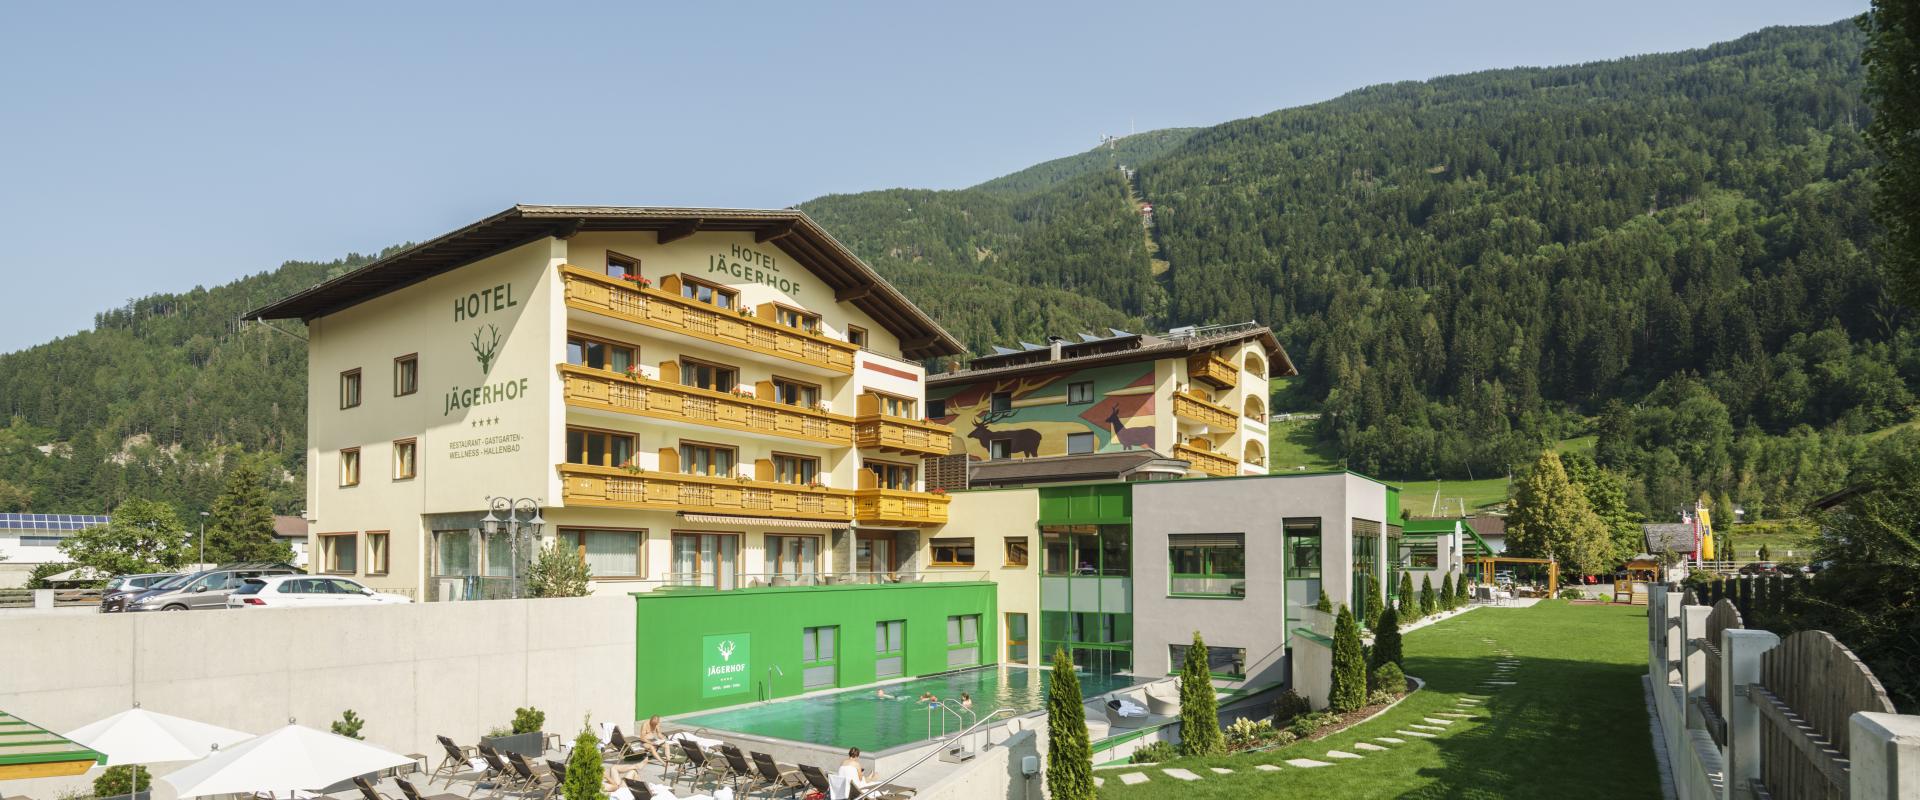 14448 Biker Hotel Jägerhof in Tirol.jpg